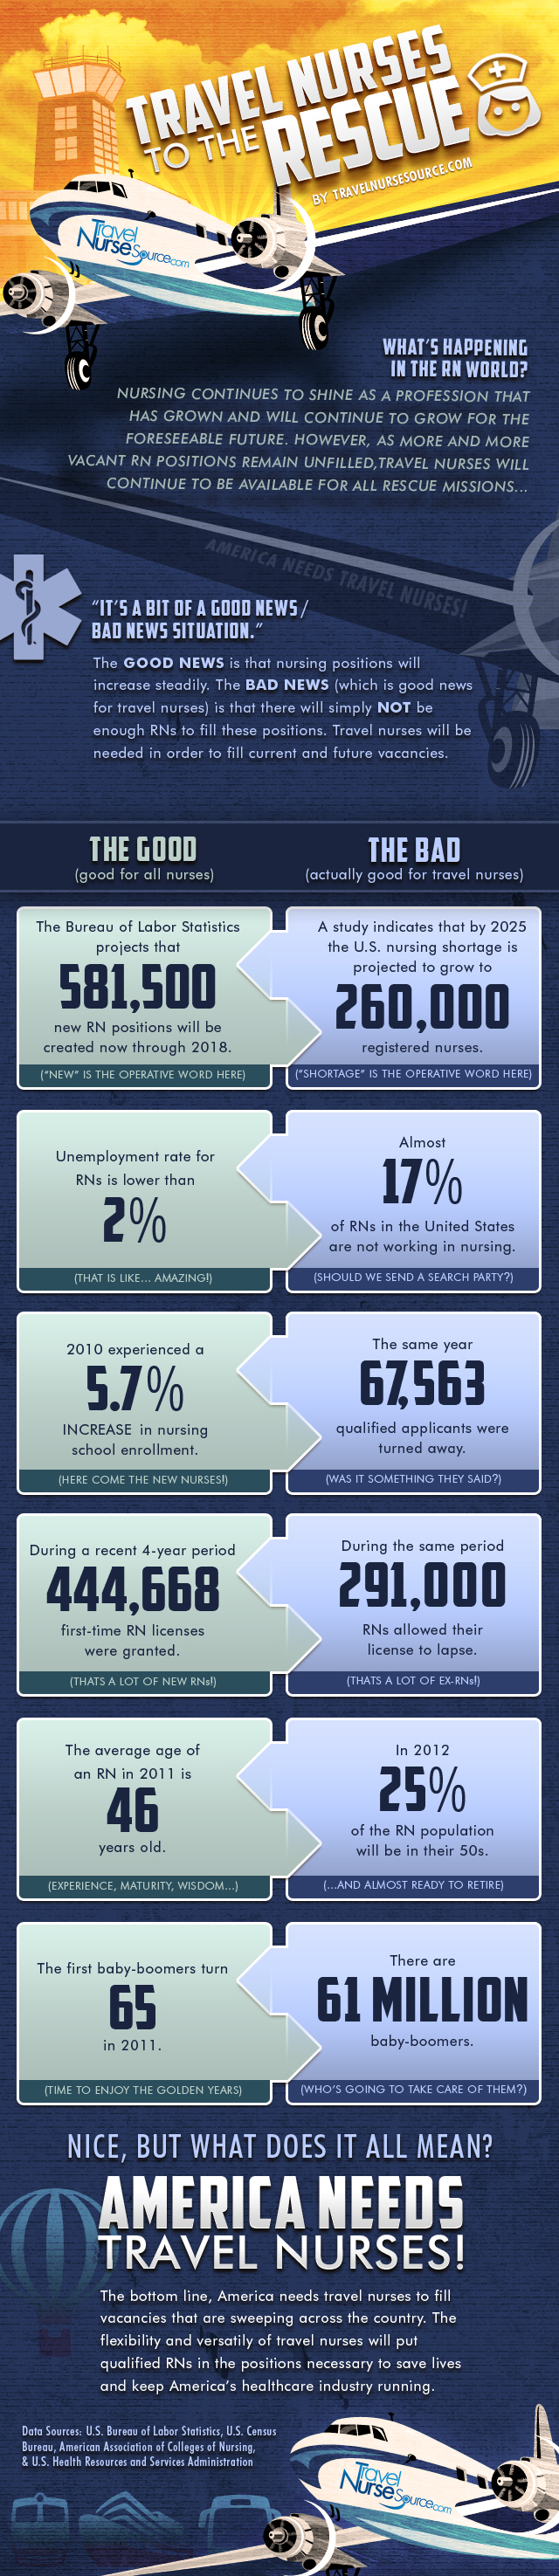 Travel Nursing Jobs Infographic